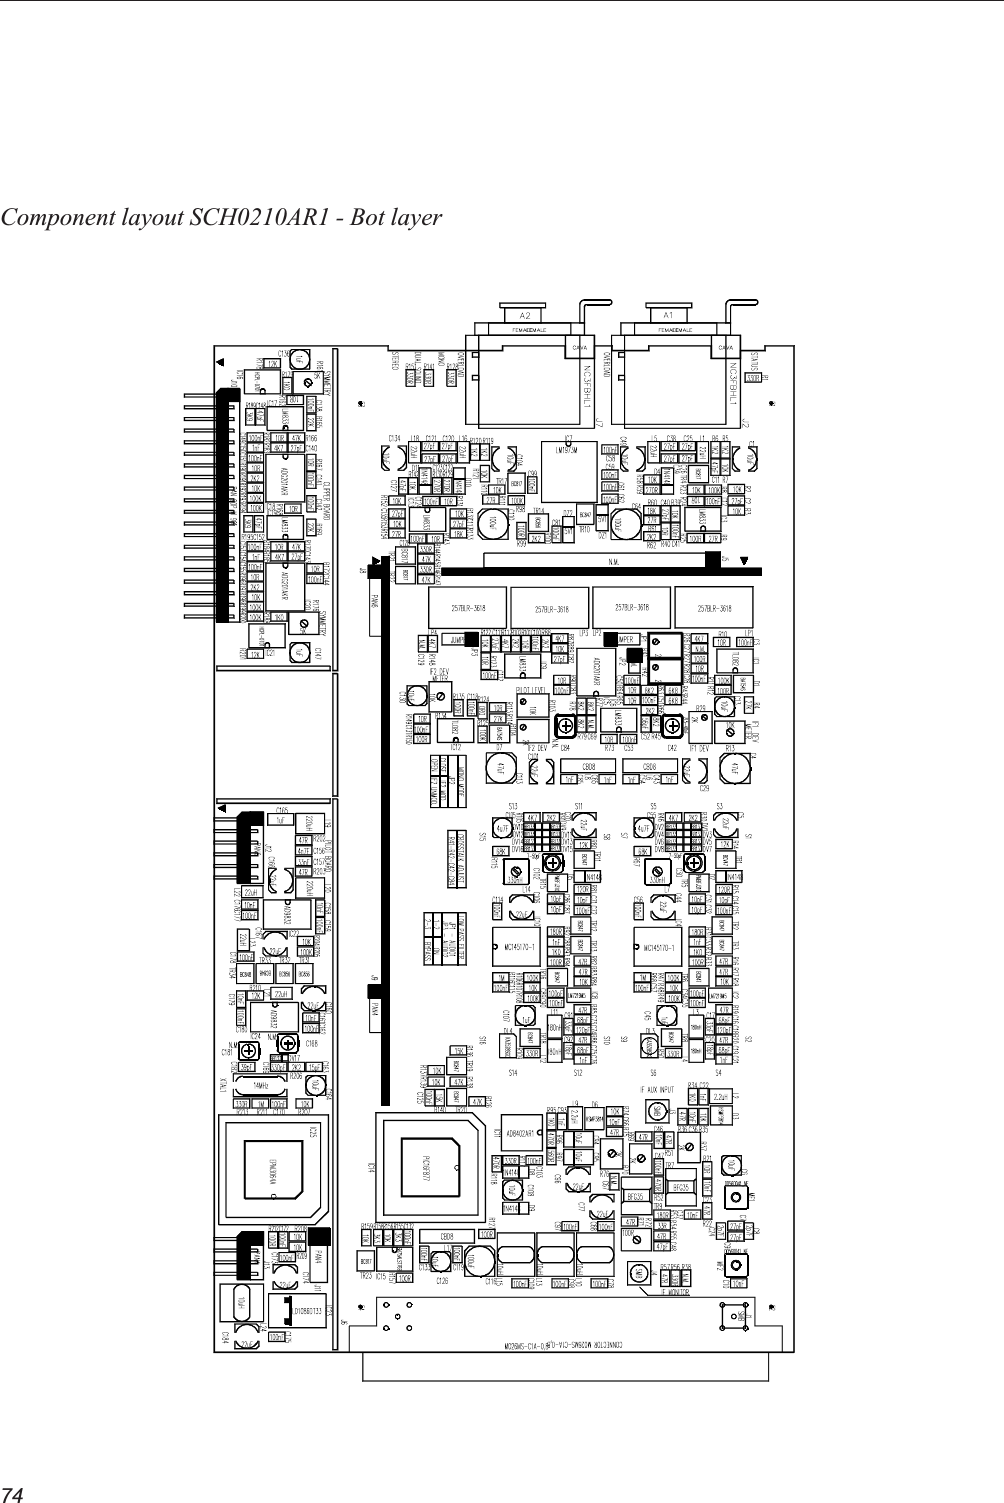 74Component layout SCH0210AR1 - Bot layer